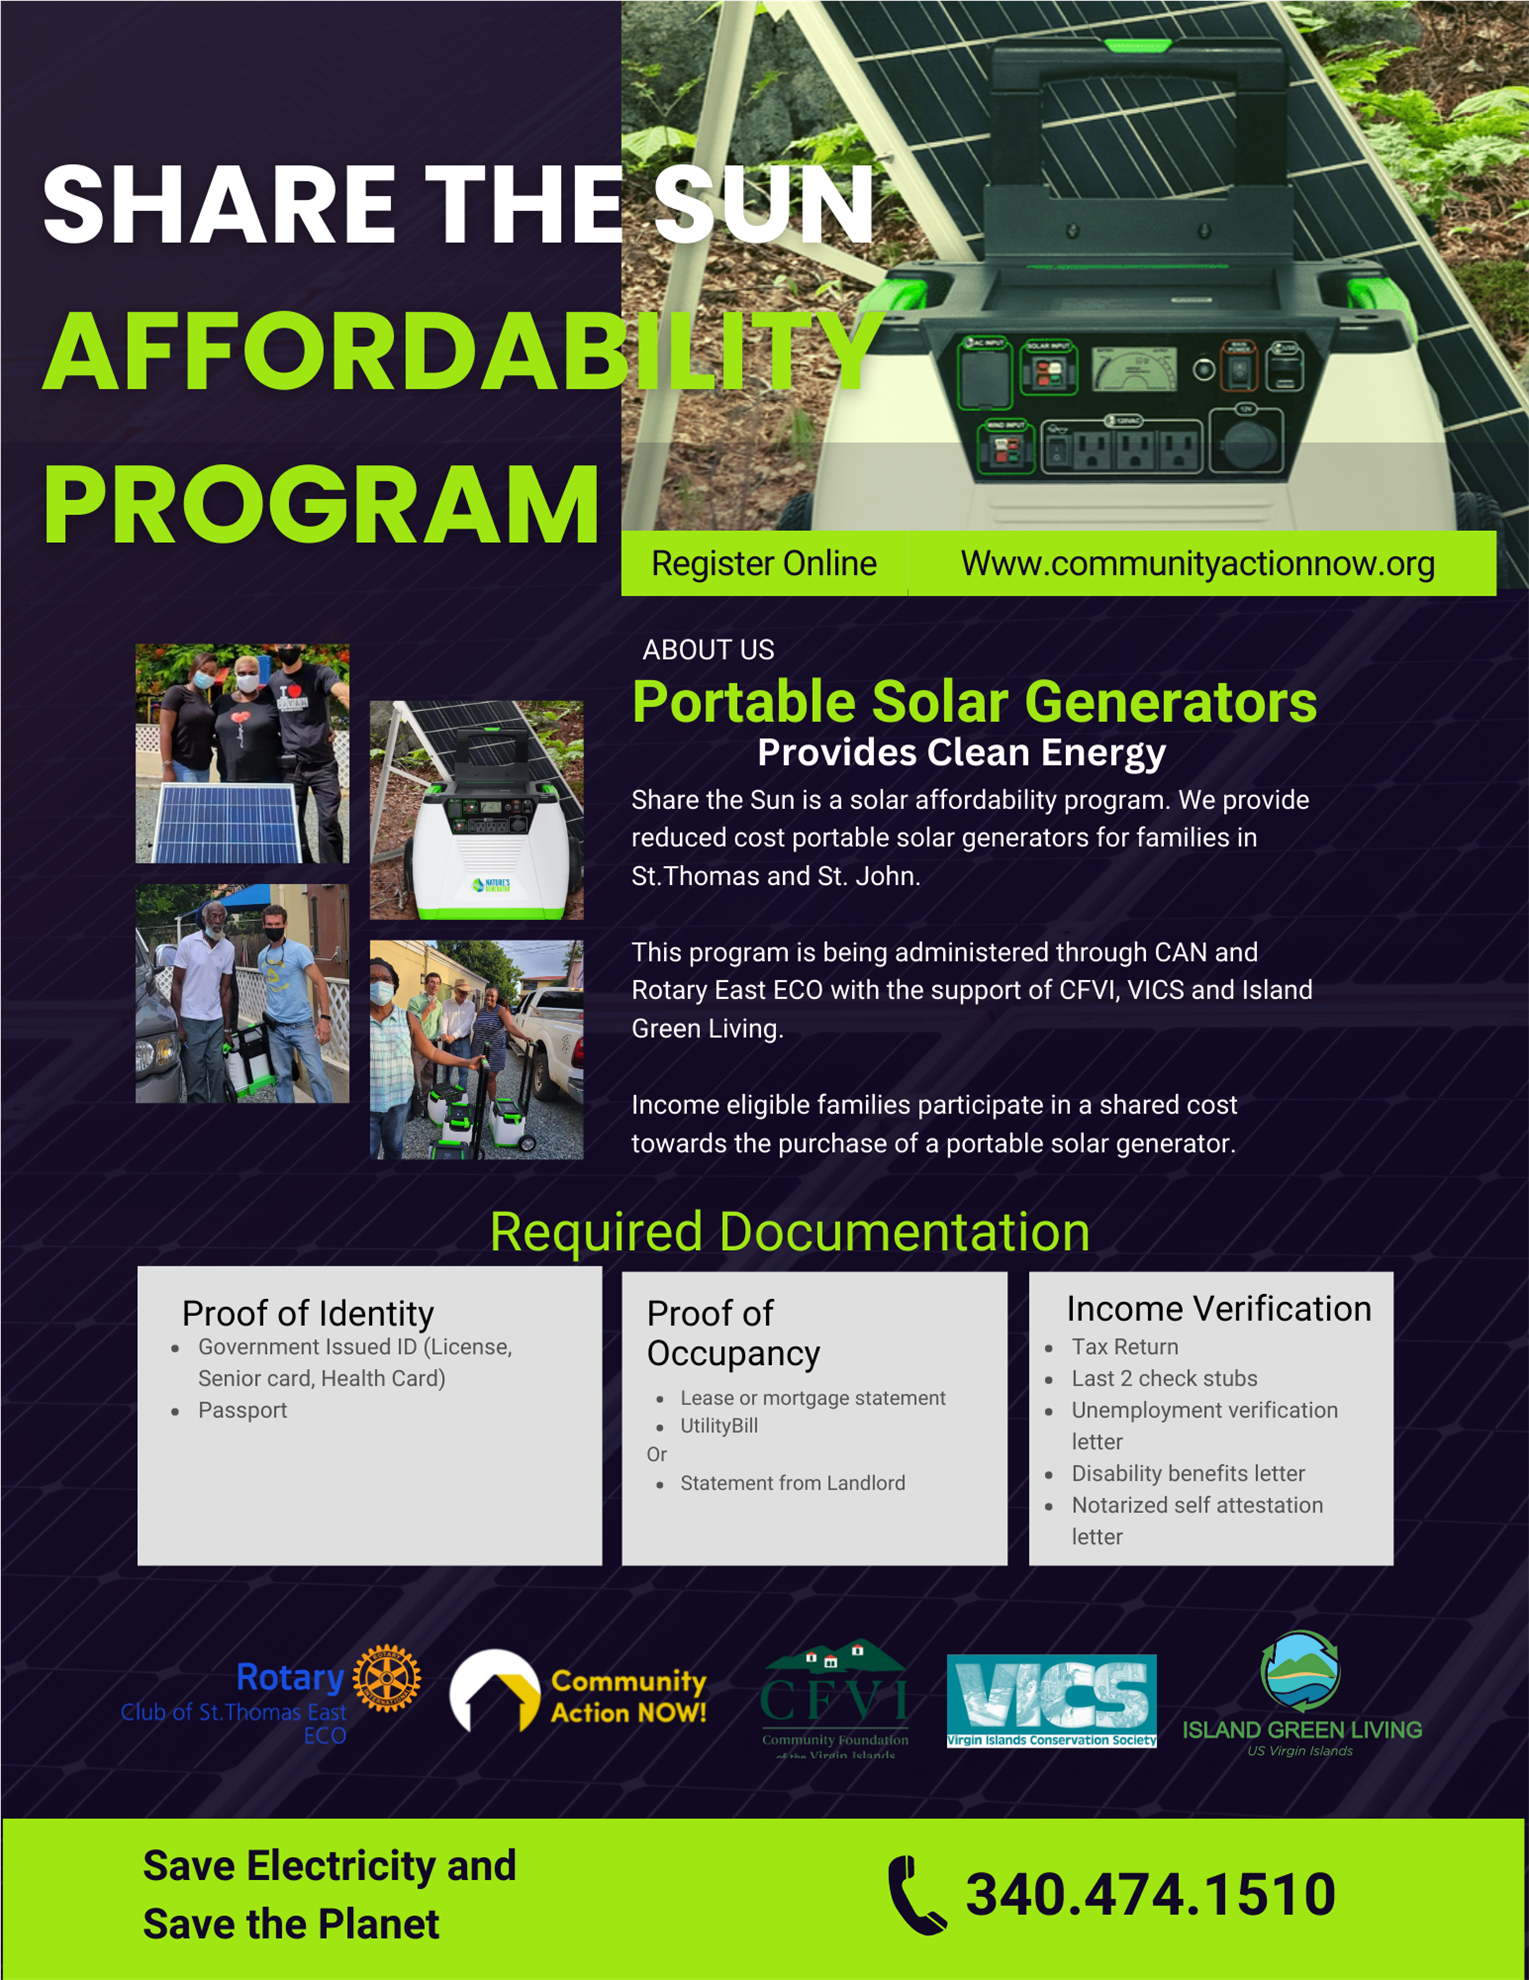 Share the Sun Solar Affordability Program Launches